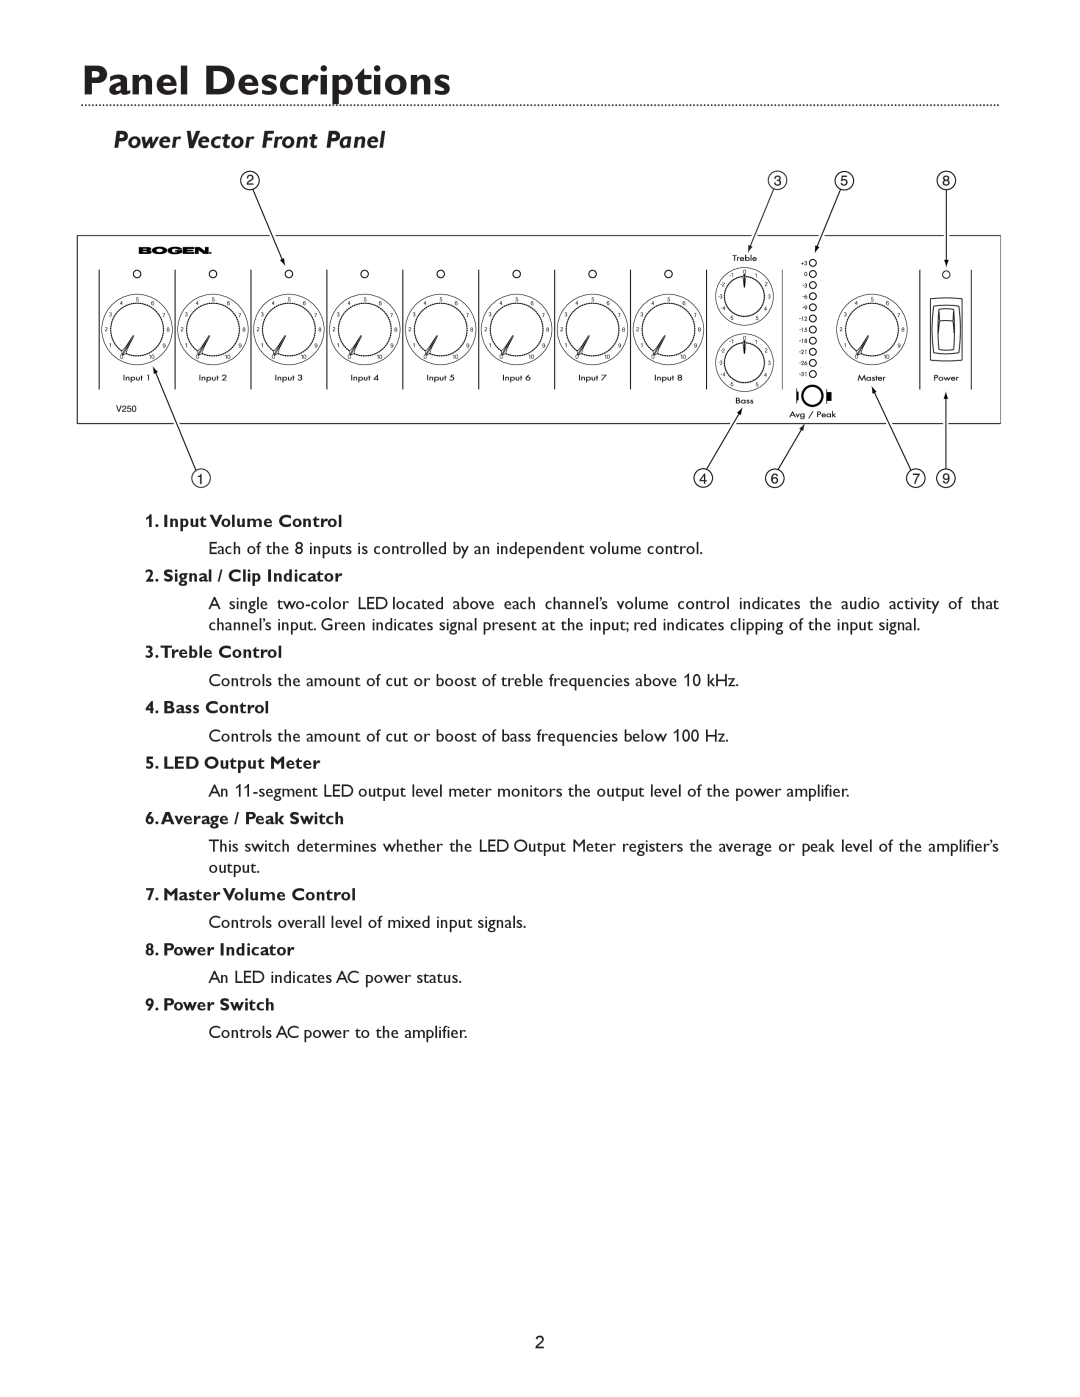 Bogen V35 Panel Descriptions, Power Vector Front Panel, Input Volume Control, Signal / Clip Indicator, Treble Control 